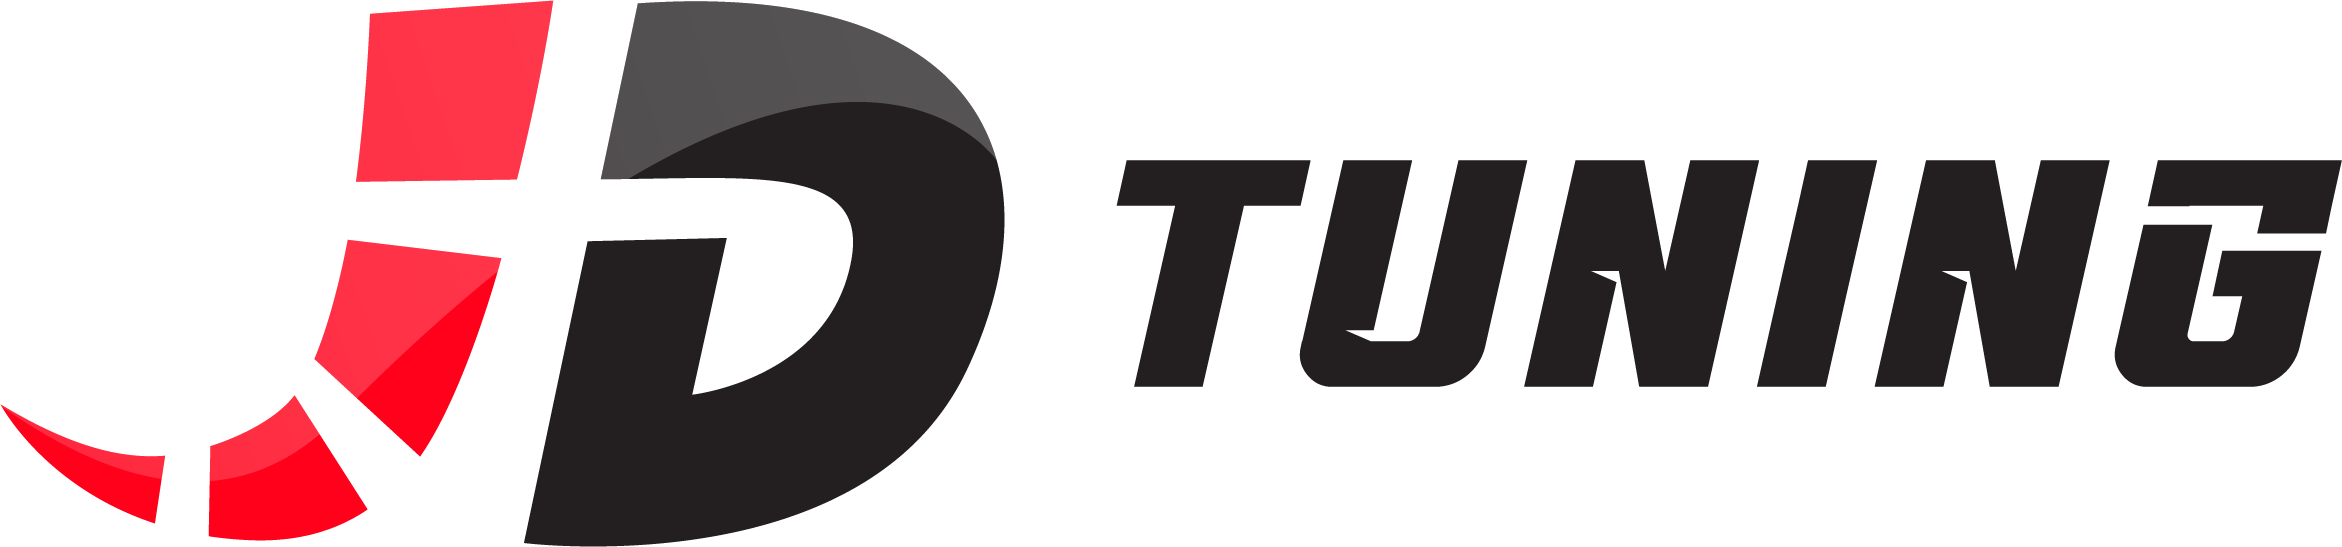 JDtuning logo